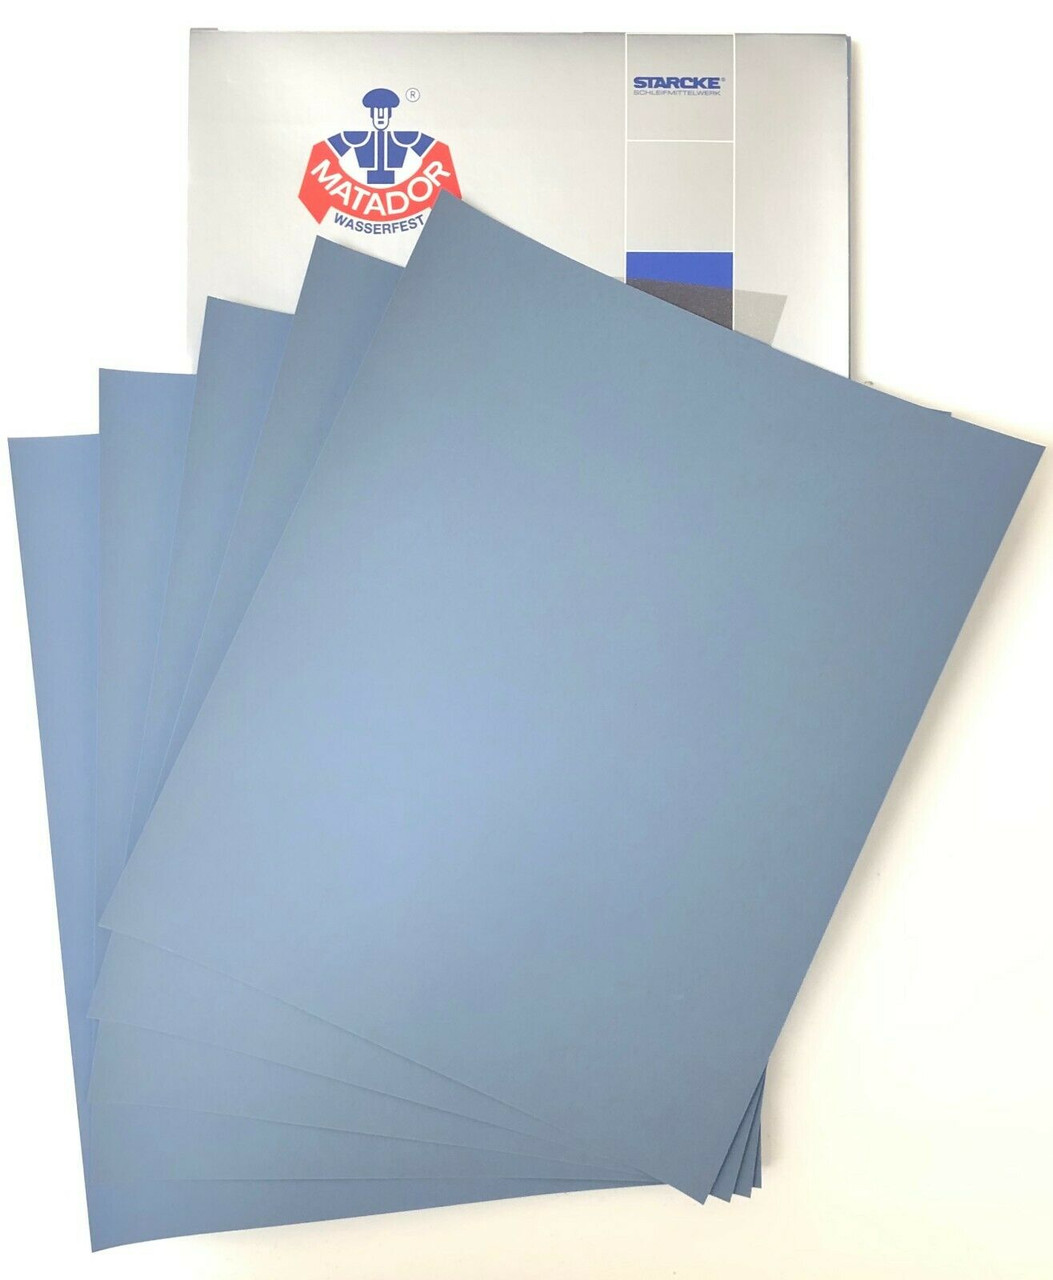 Matador Waterproof Sandpaper Wet or Dry Abrasive Paper 1200 Grit Per Pack of 50 Made in Germany